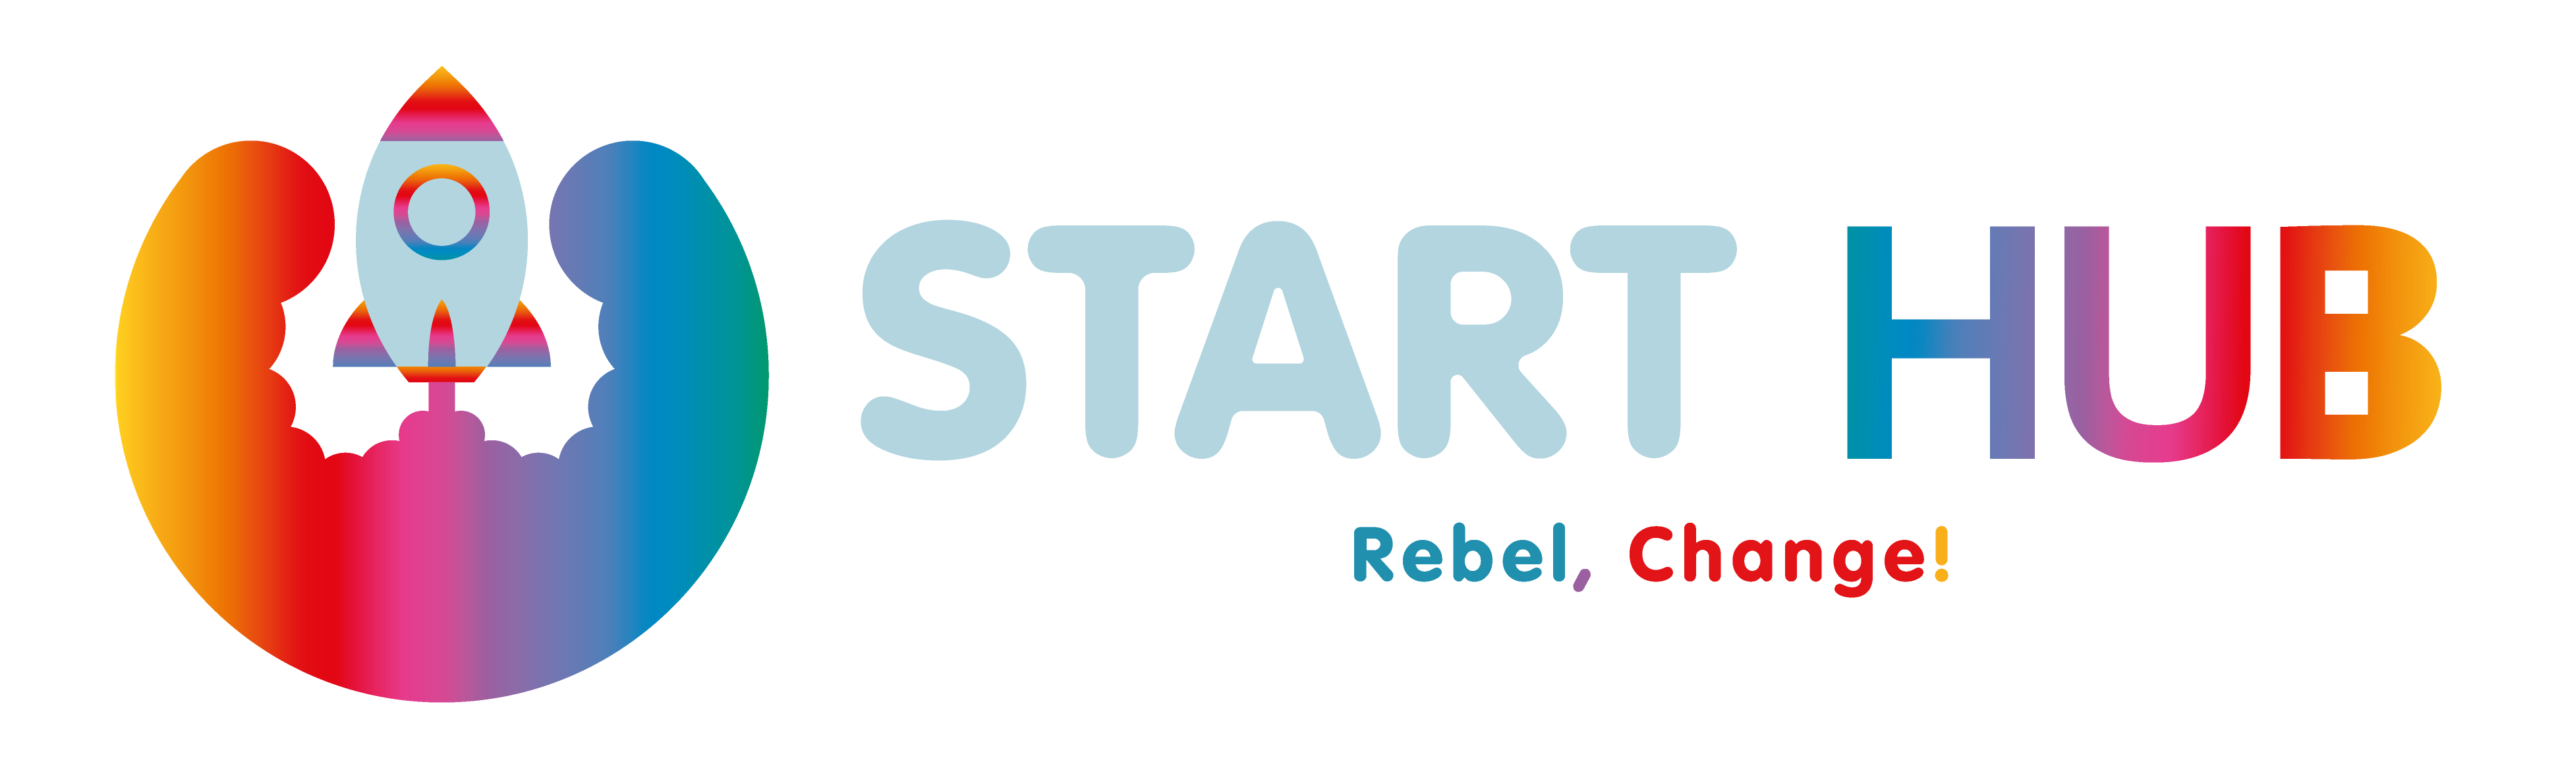 Start Hub sviluppo prodotto con marketing innovativo